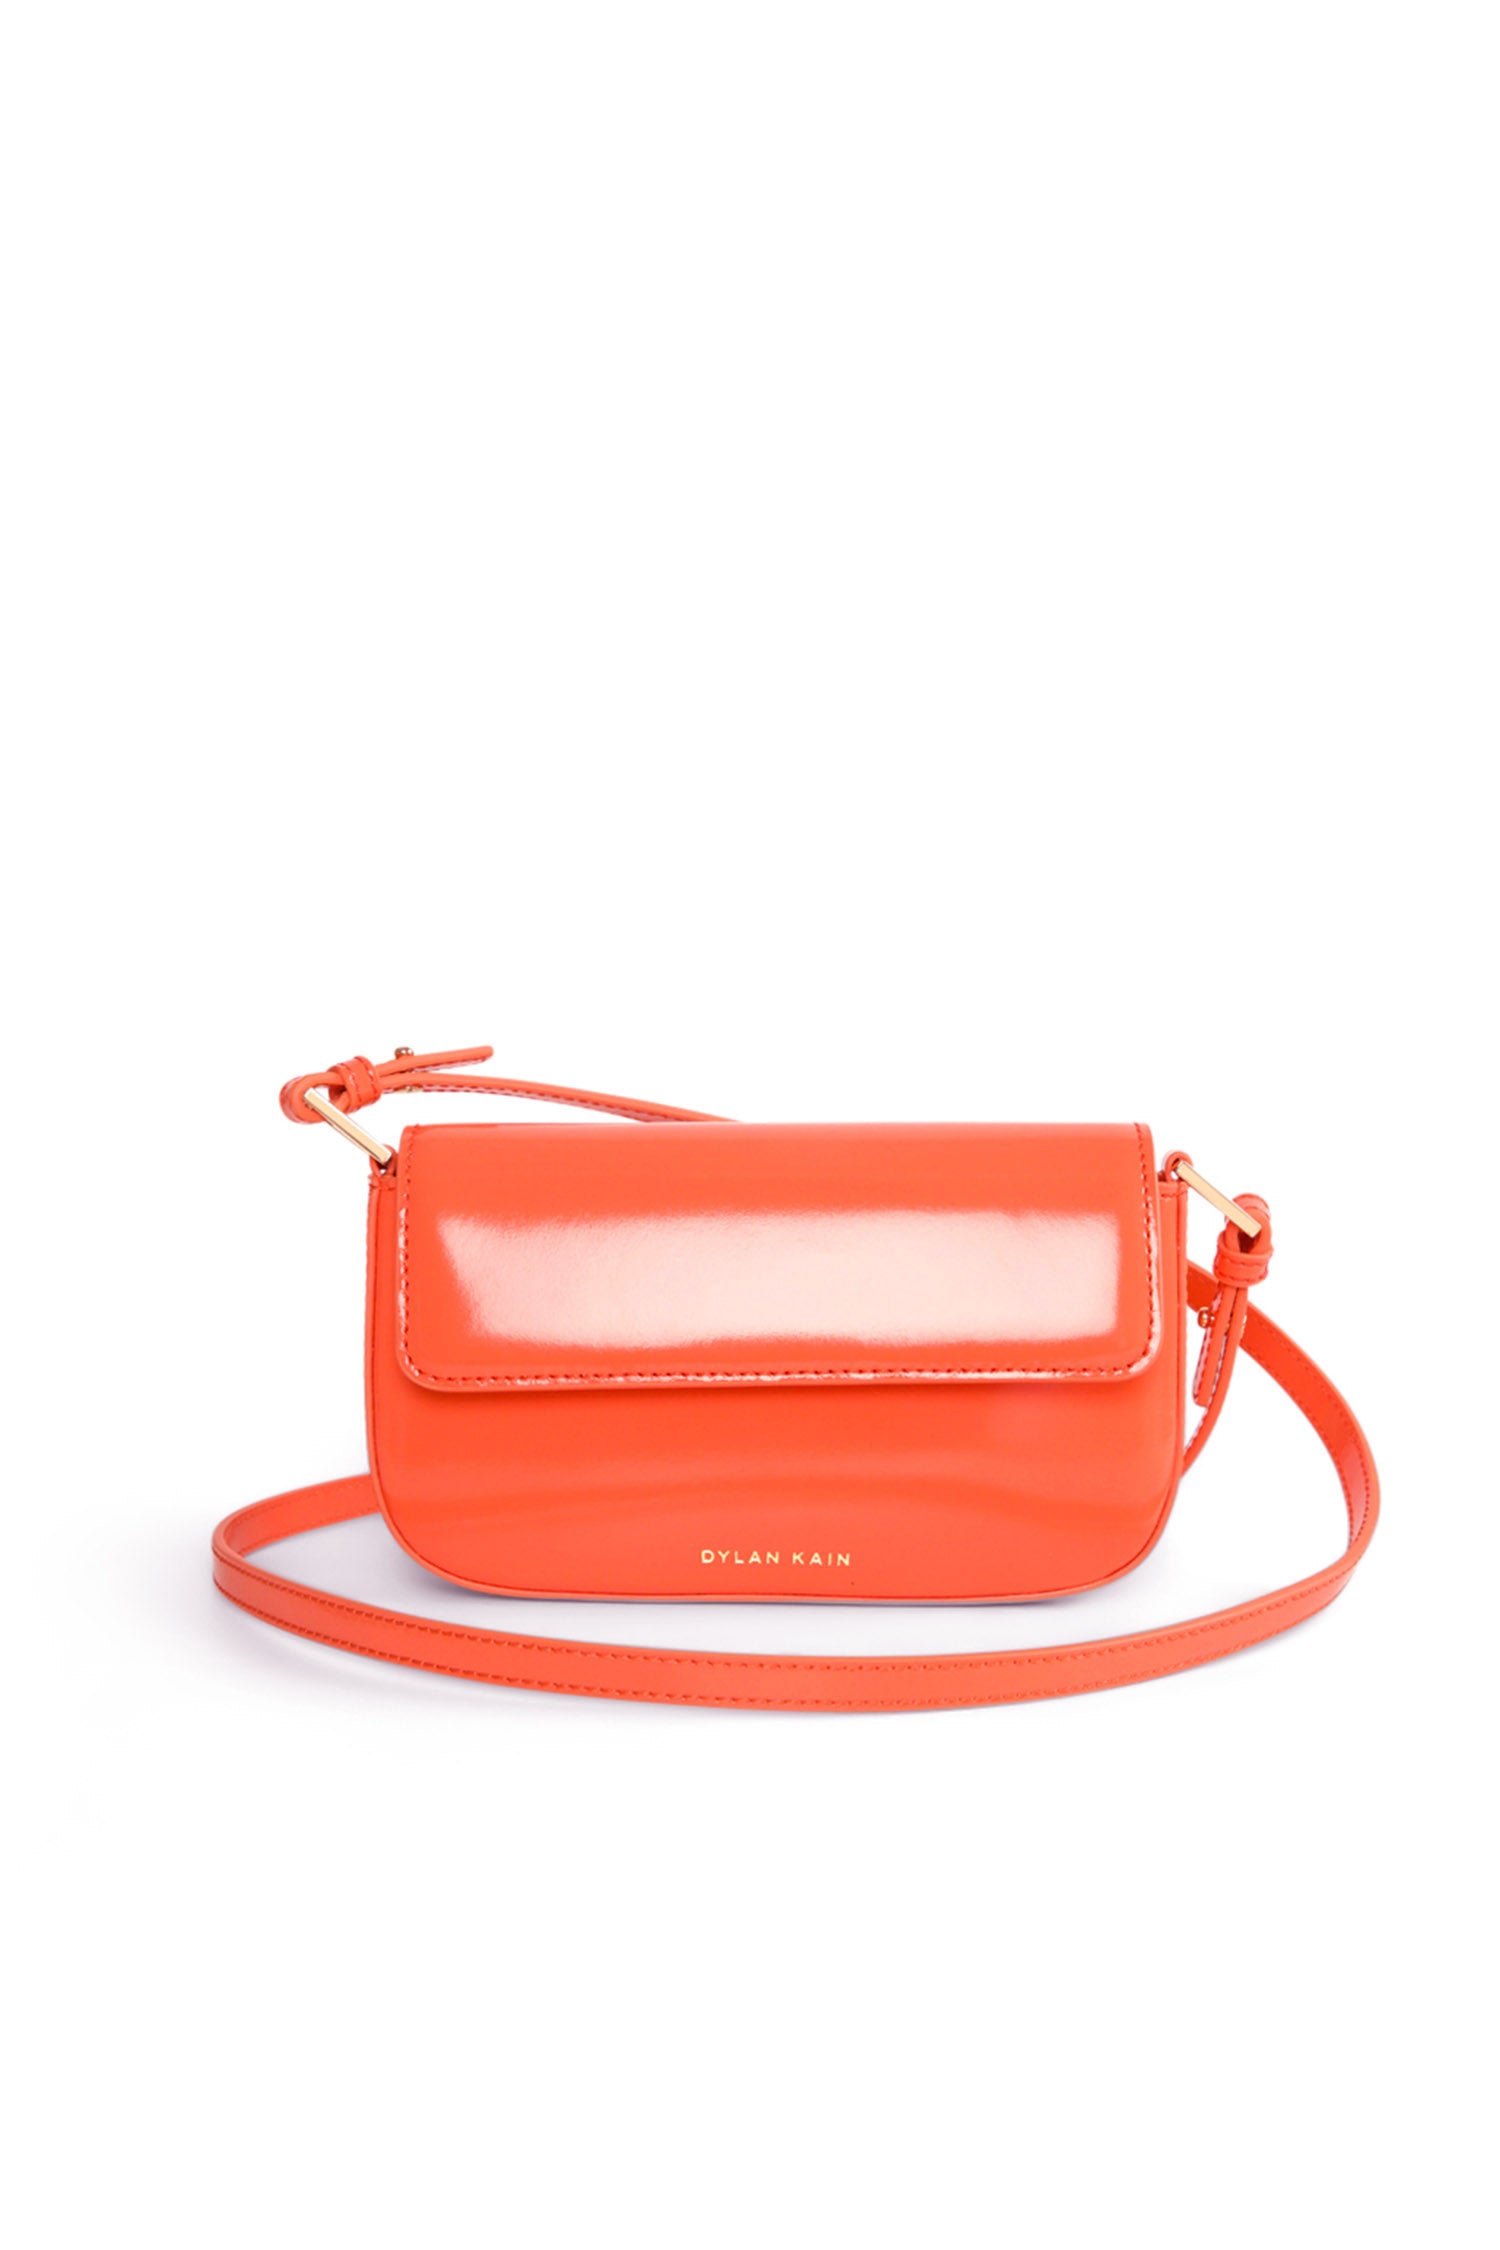 The Amelia Patent Bag Orange Sunset